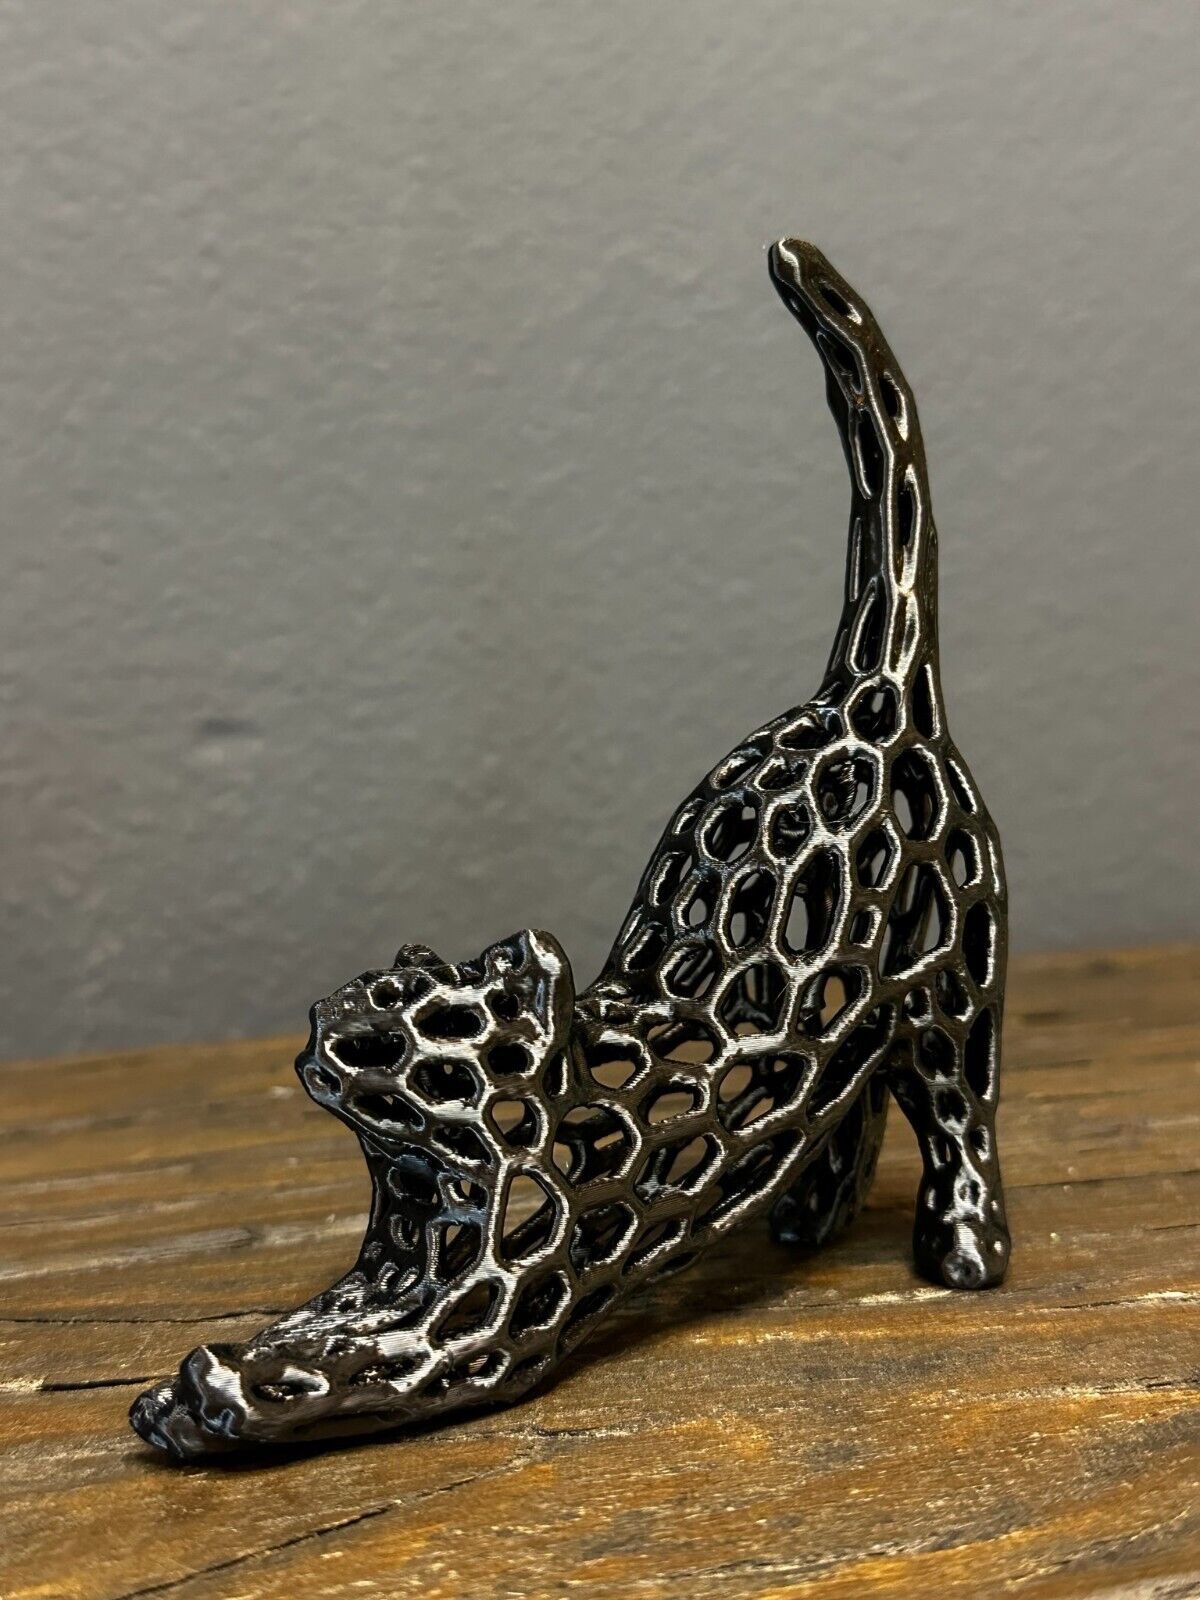 3D Printed Cat Stretch Voronoi Figurine - Multiple Colors Available